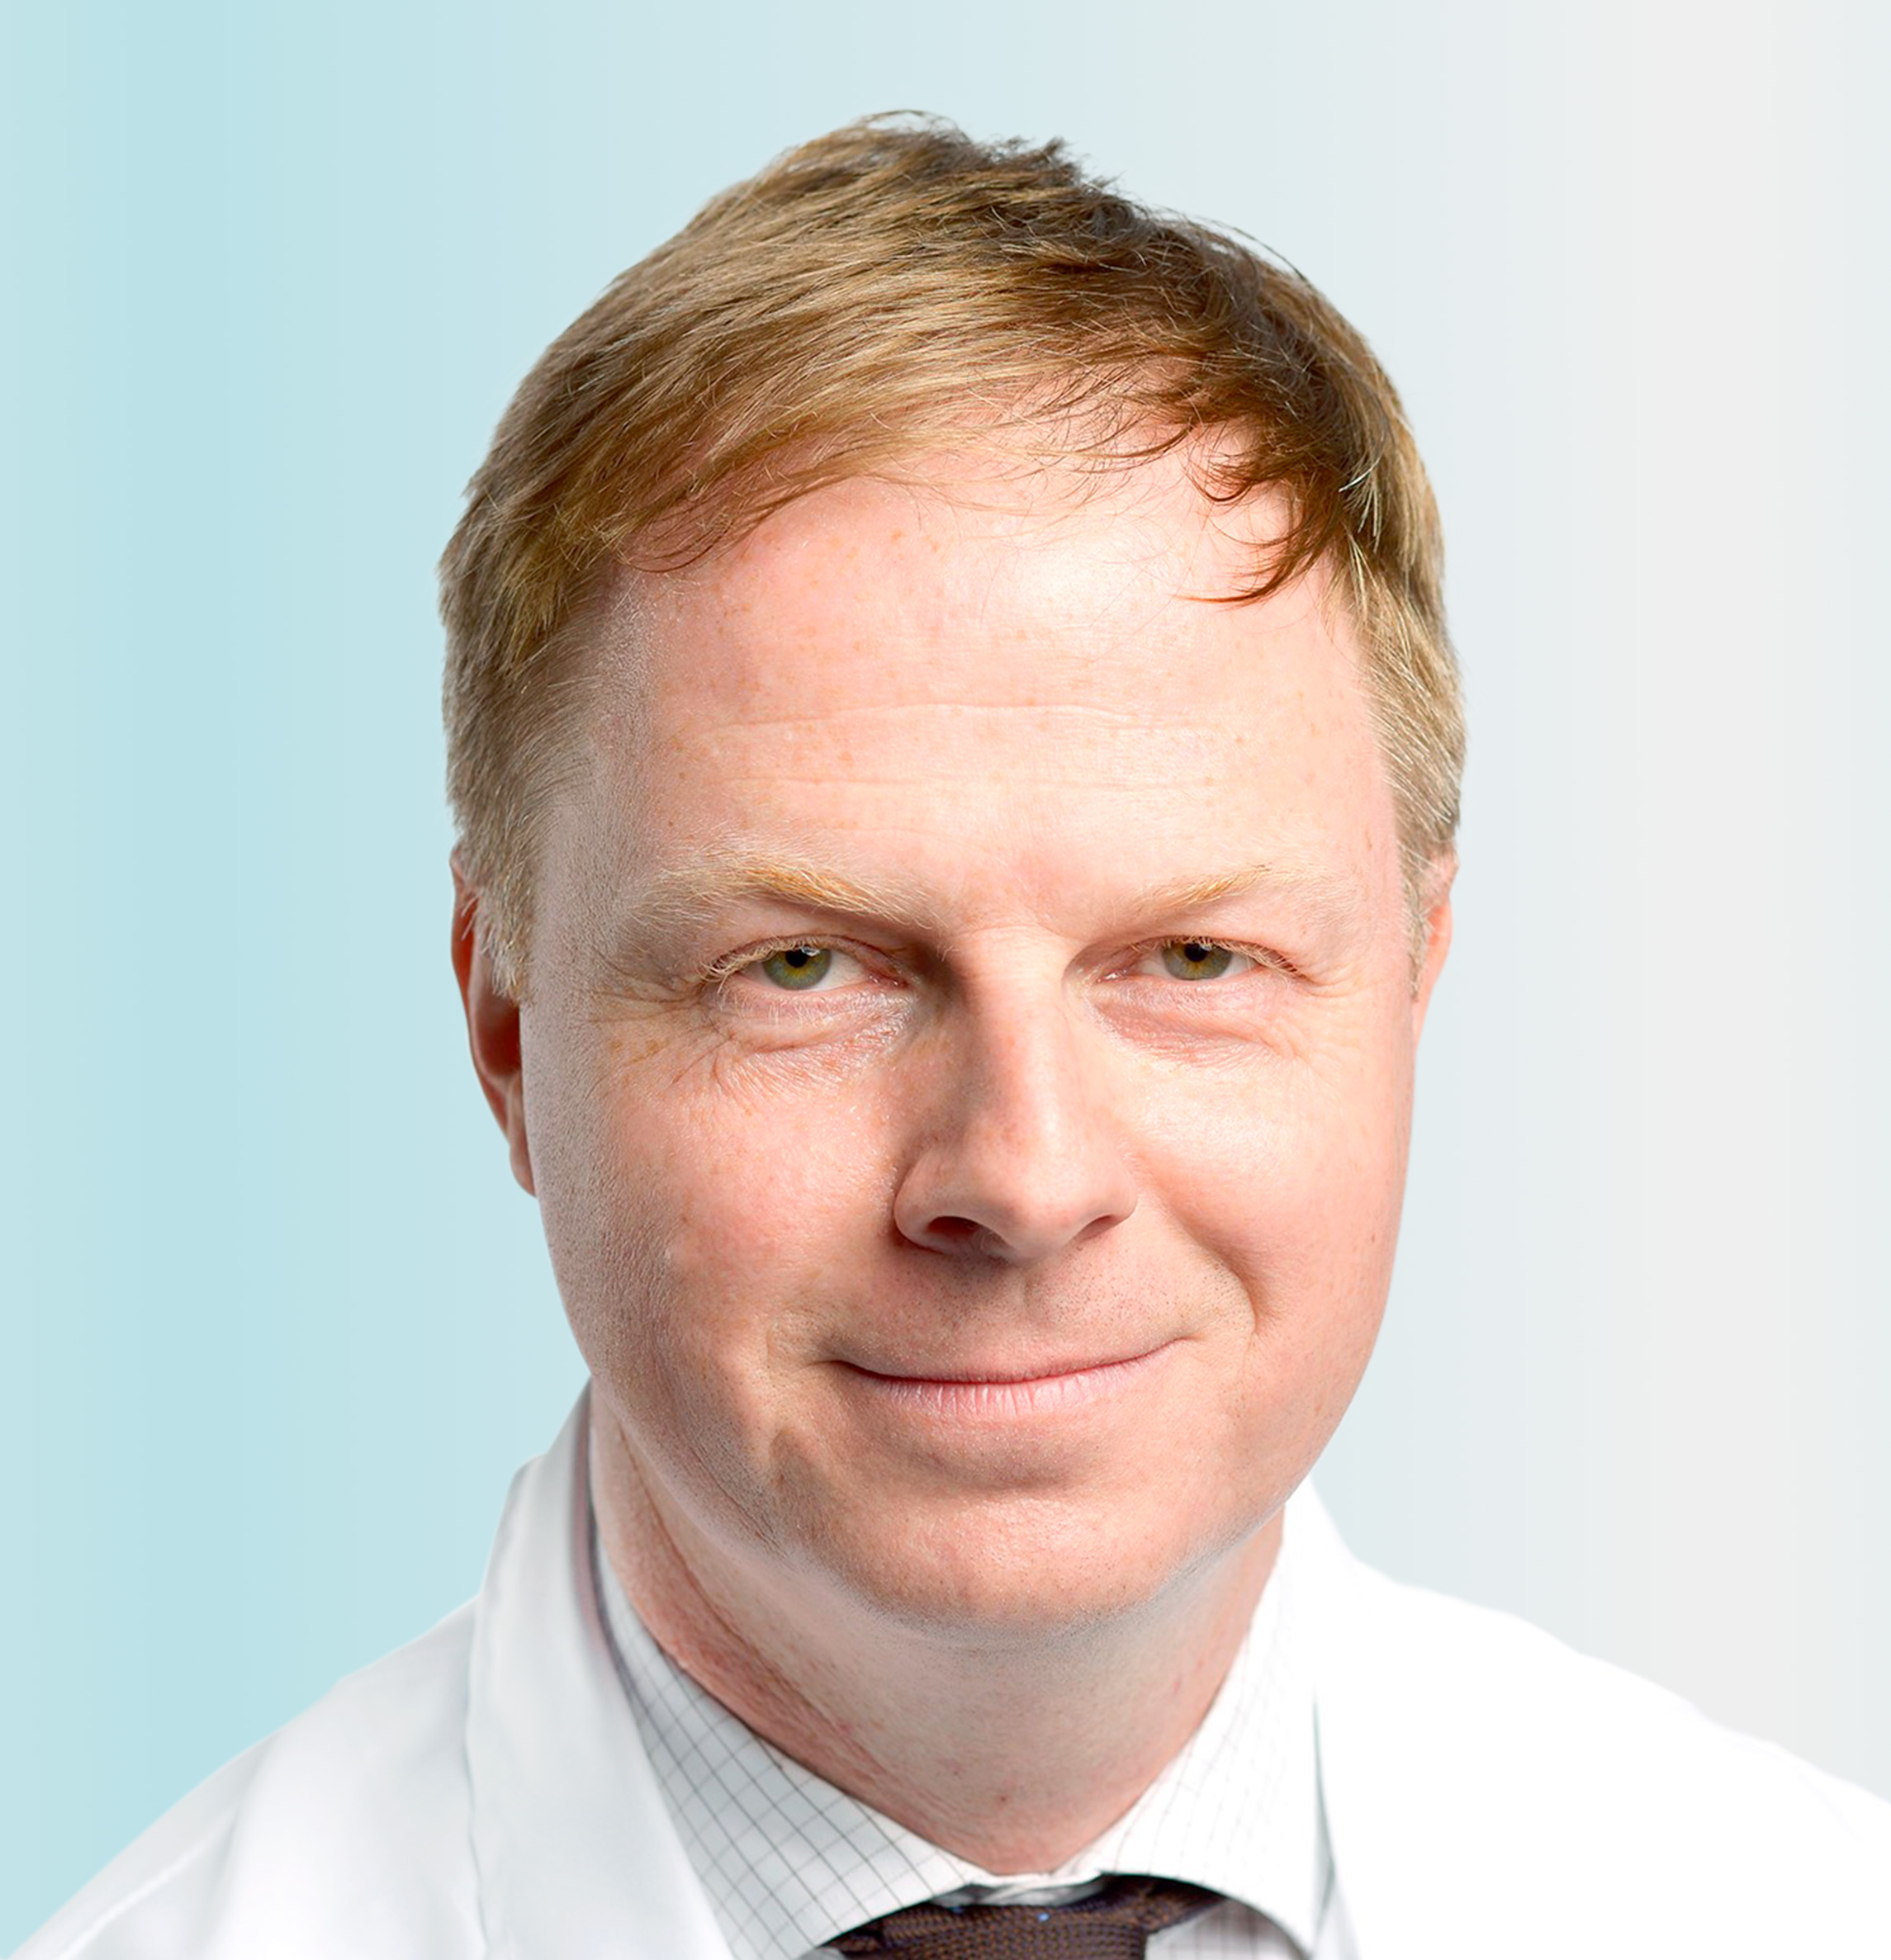 Dermatologue, Dr. med. Siegfried Borelli